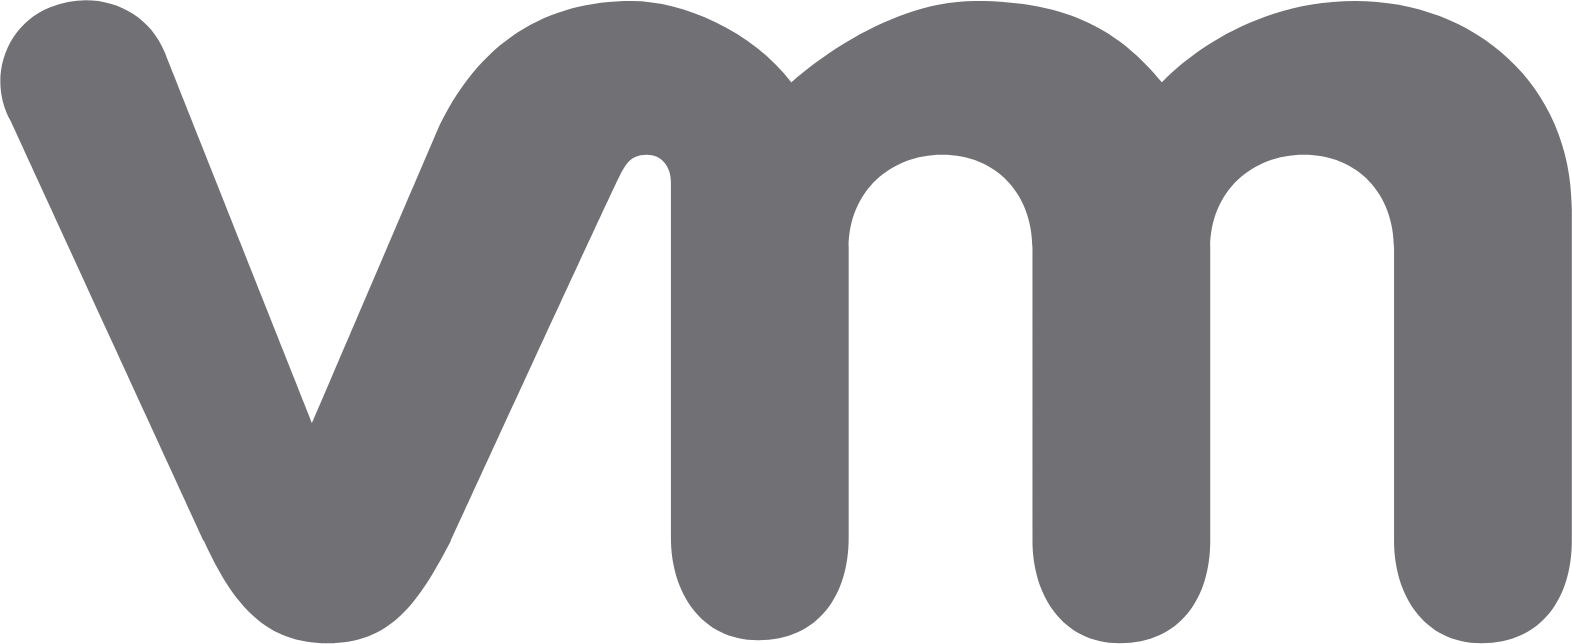 Vmware logo (transparent PNG)